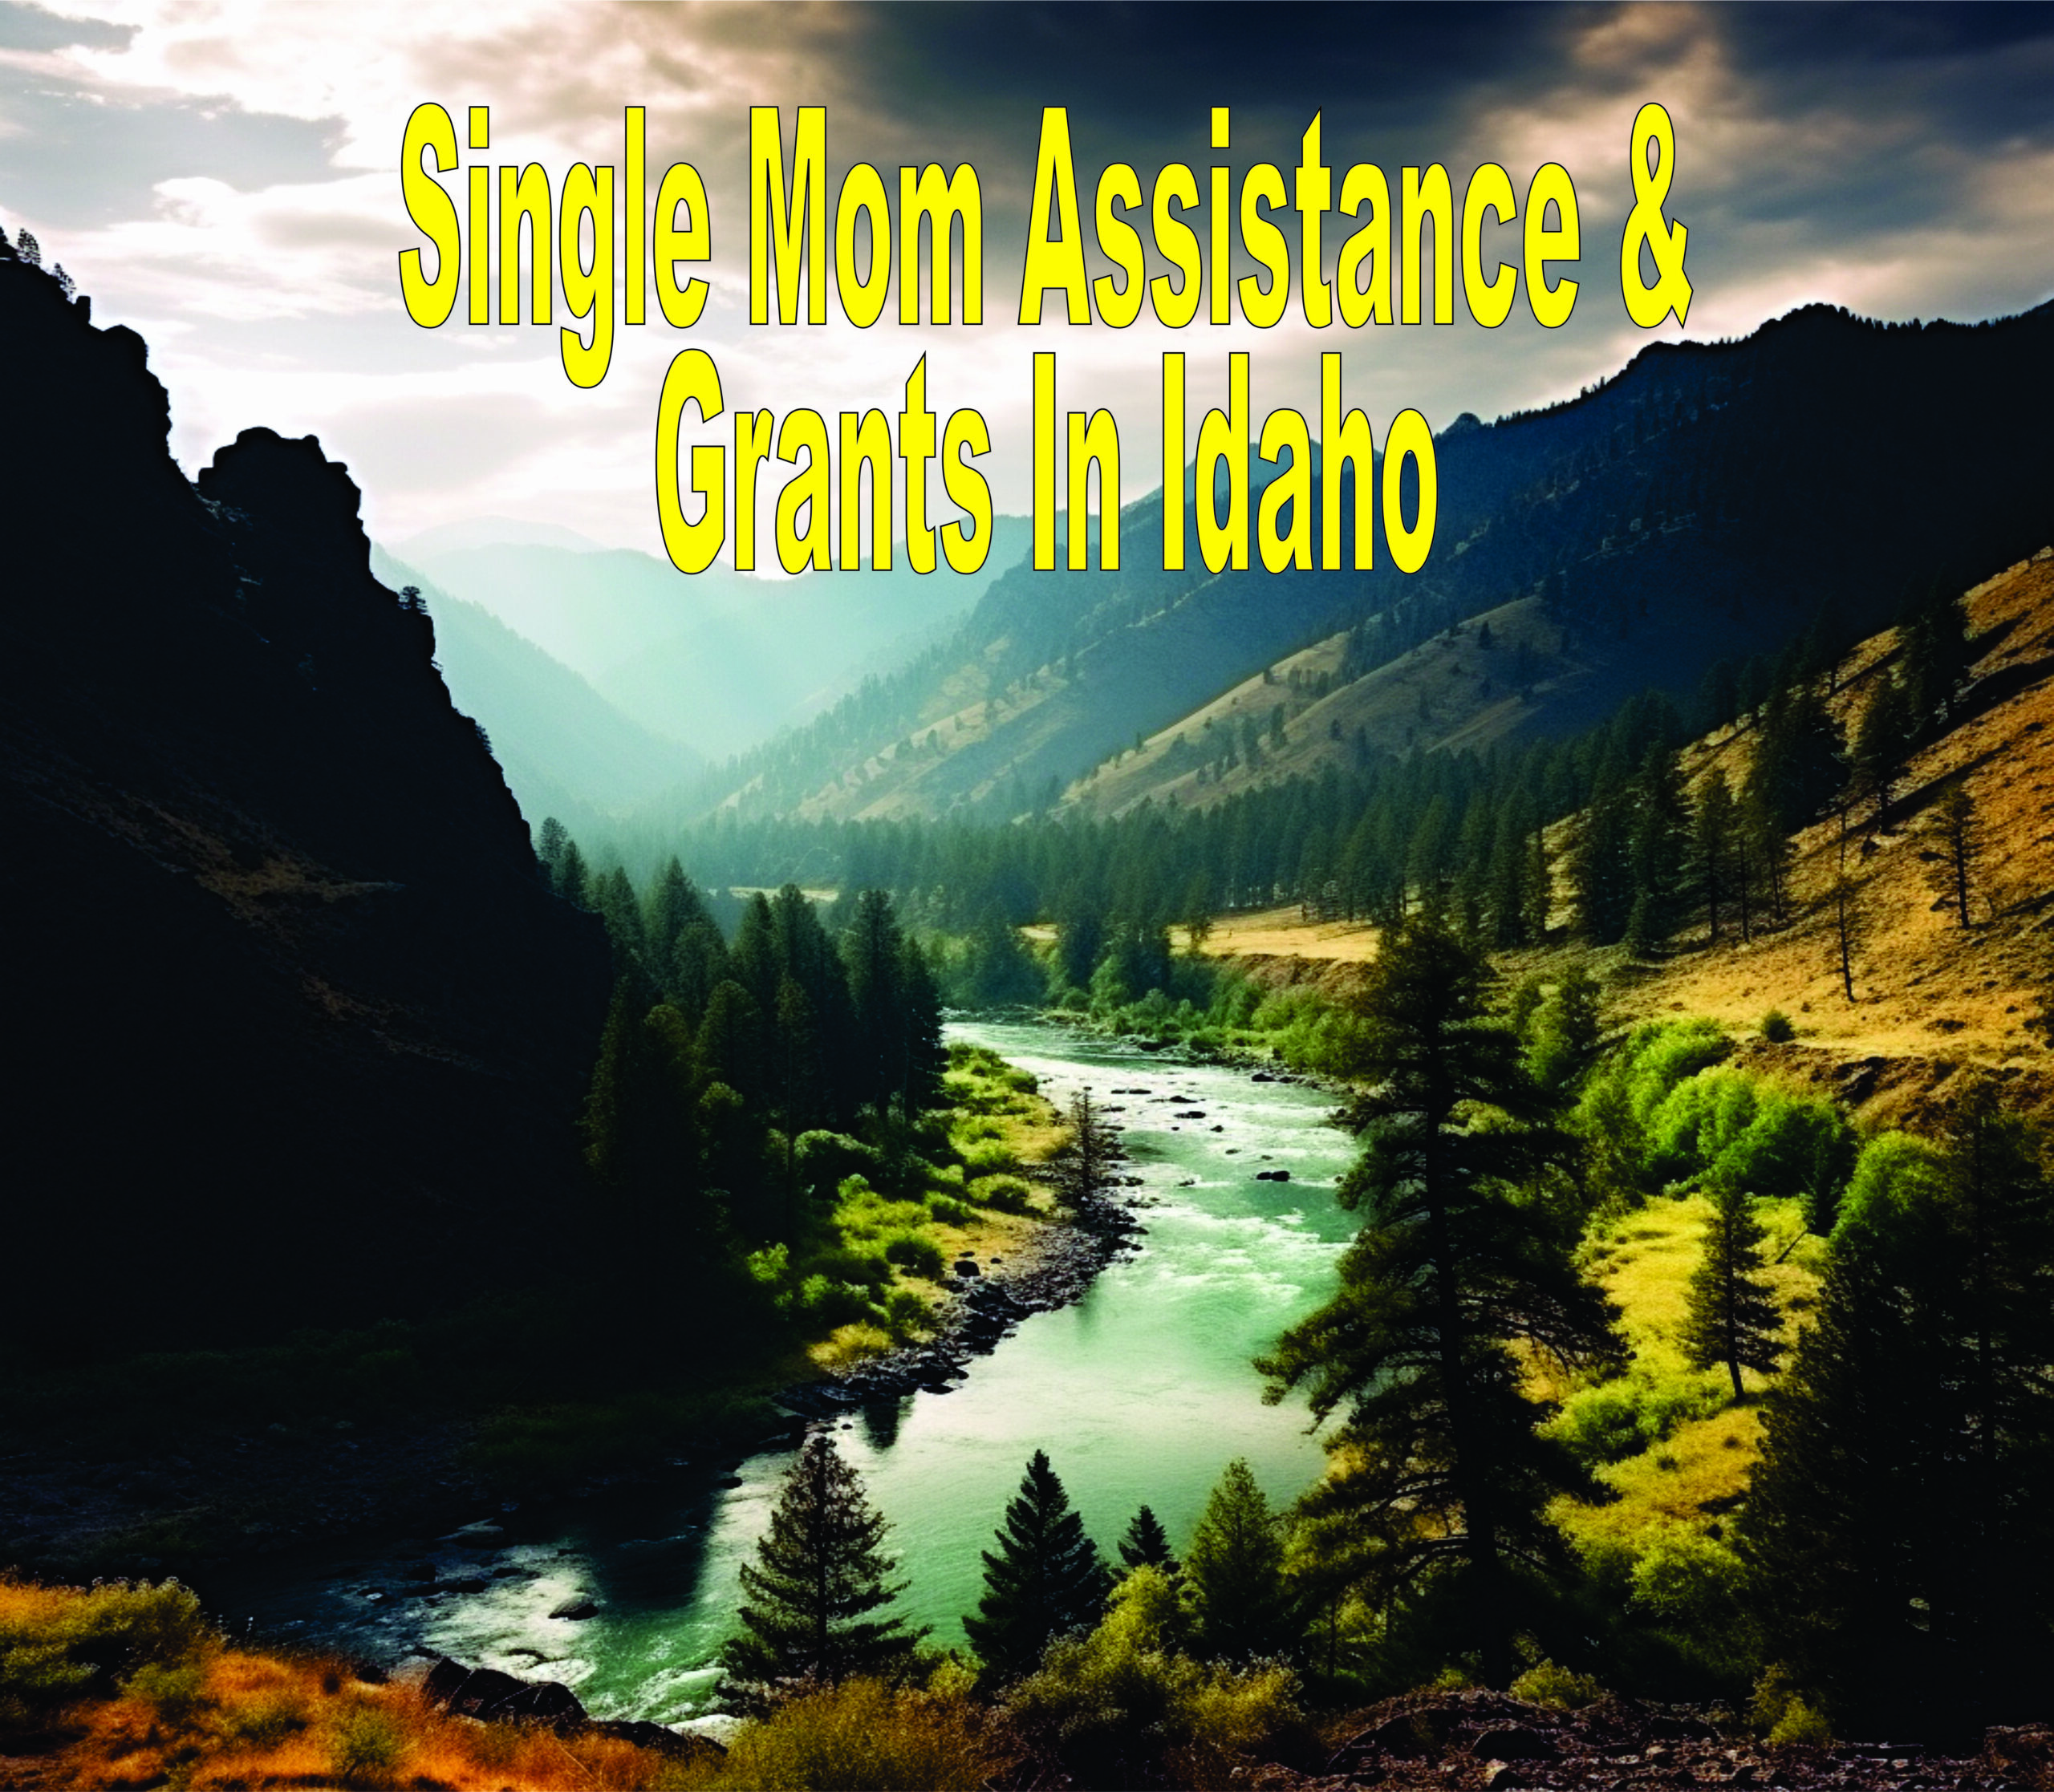 Single Mom Assistance & Grants In Idaho